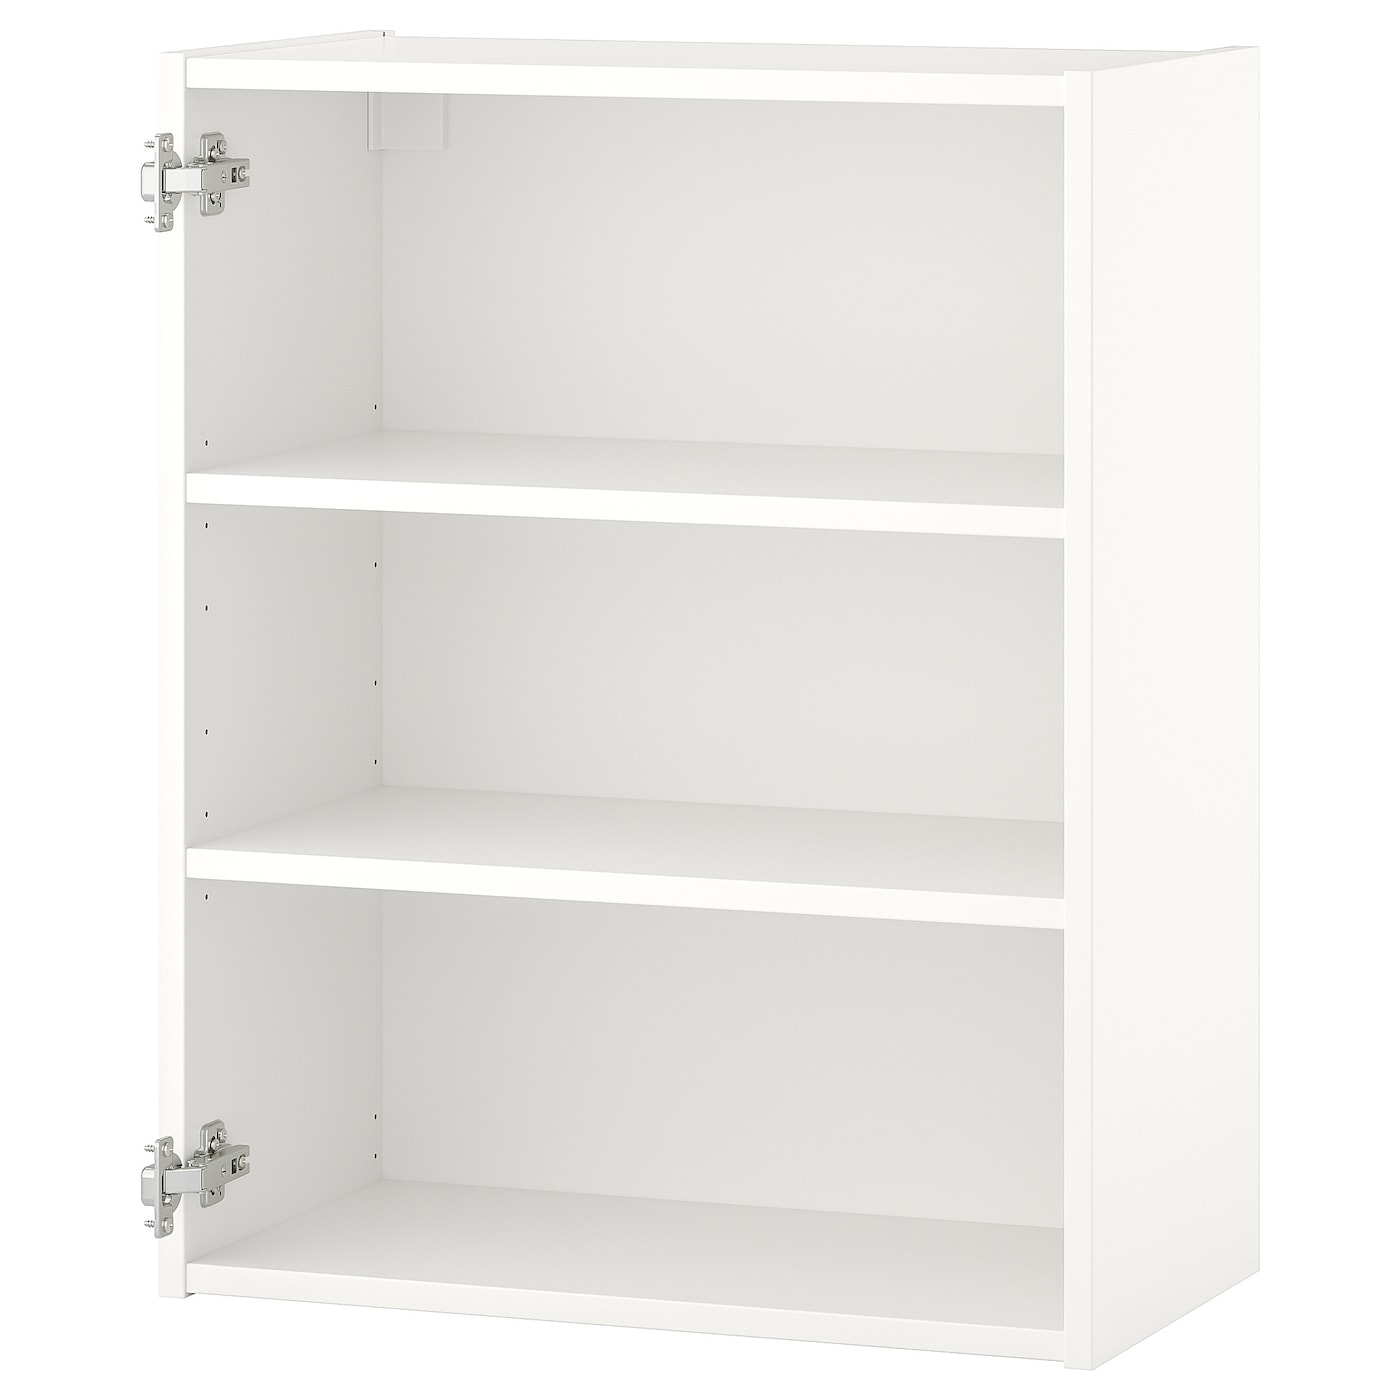 Каркас кухонного навесного шкафа - IKEA METOD/МЕТОД ИКЕА,  60х30х75 см, белый